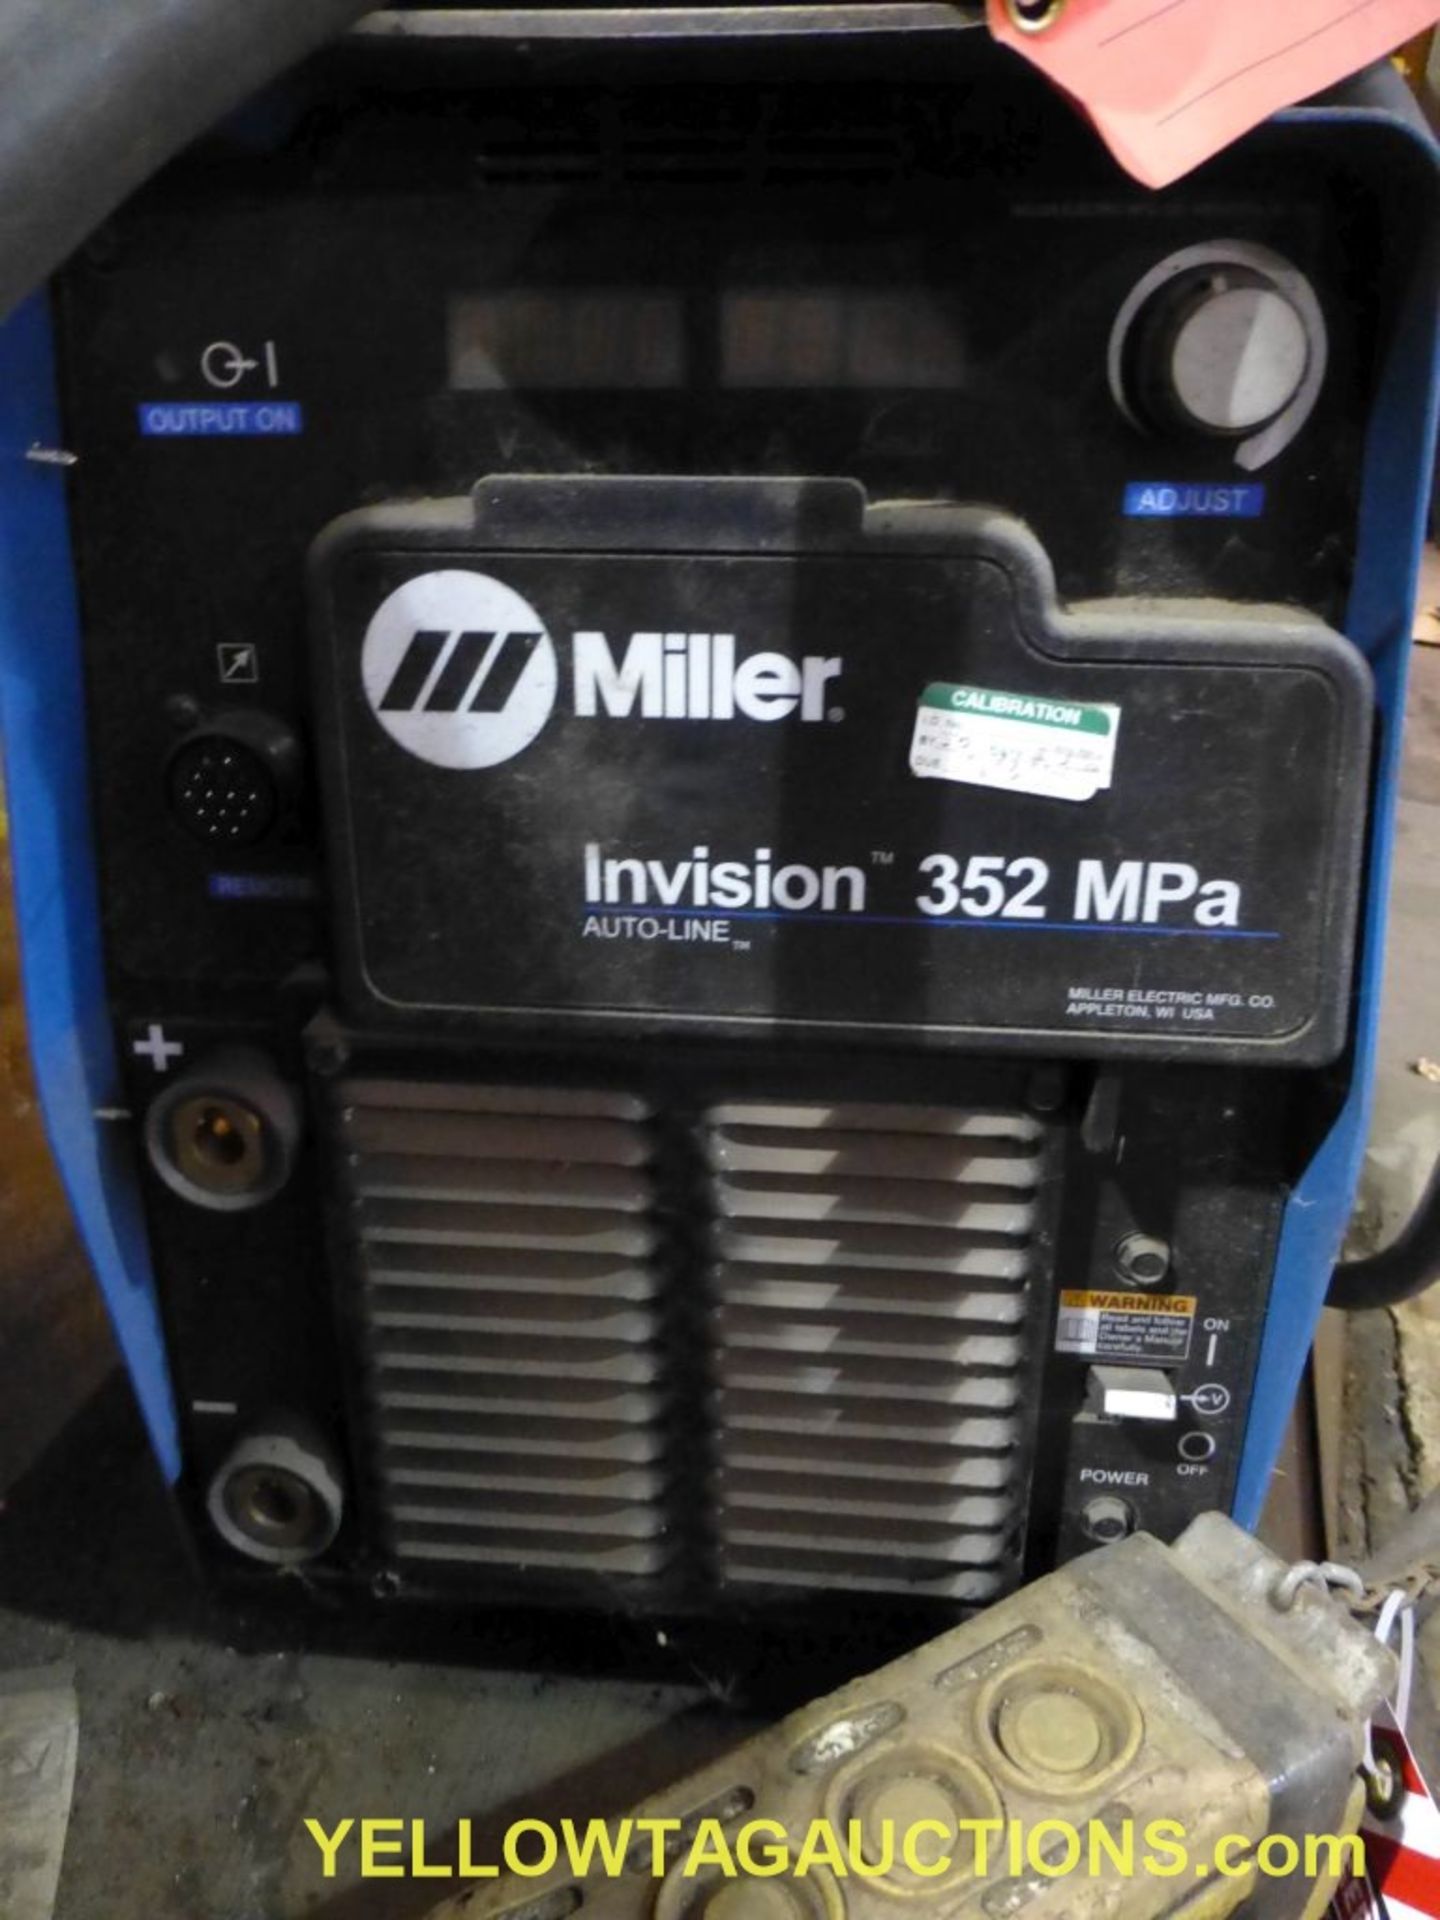 Miller Autolite Invision 352 MPA Plasma Cutter - Image 3 of 9